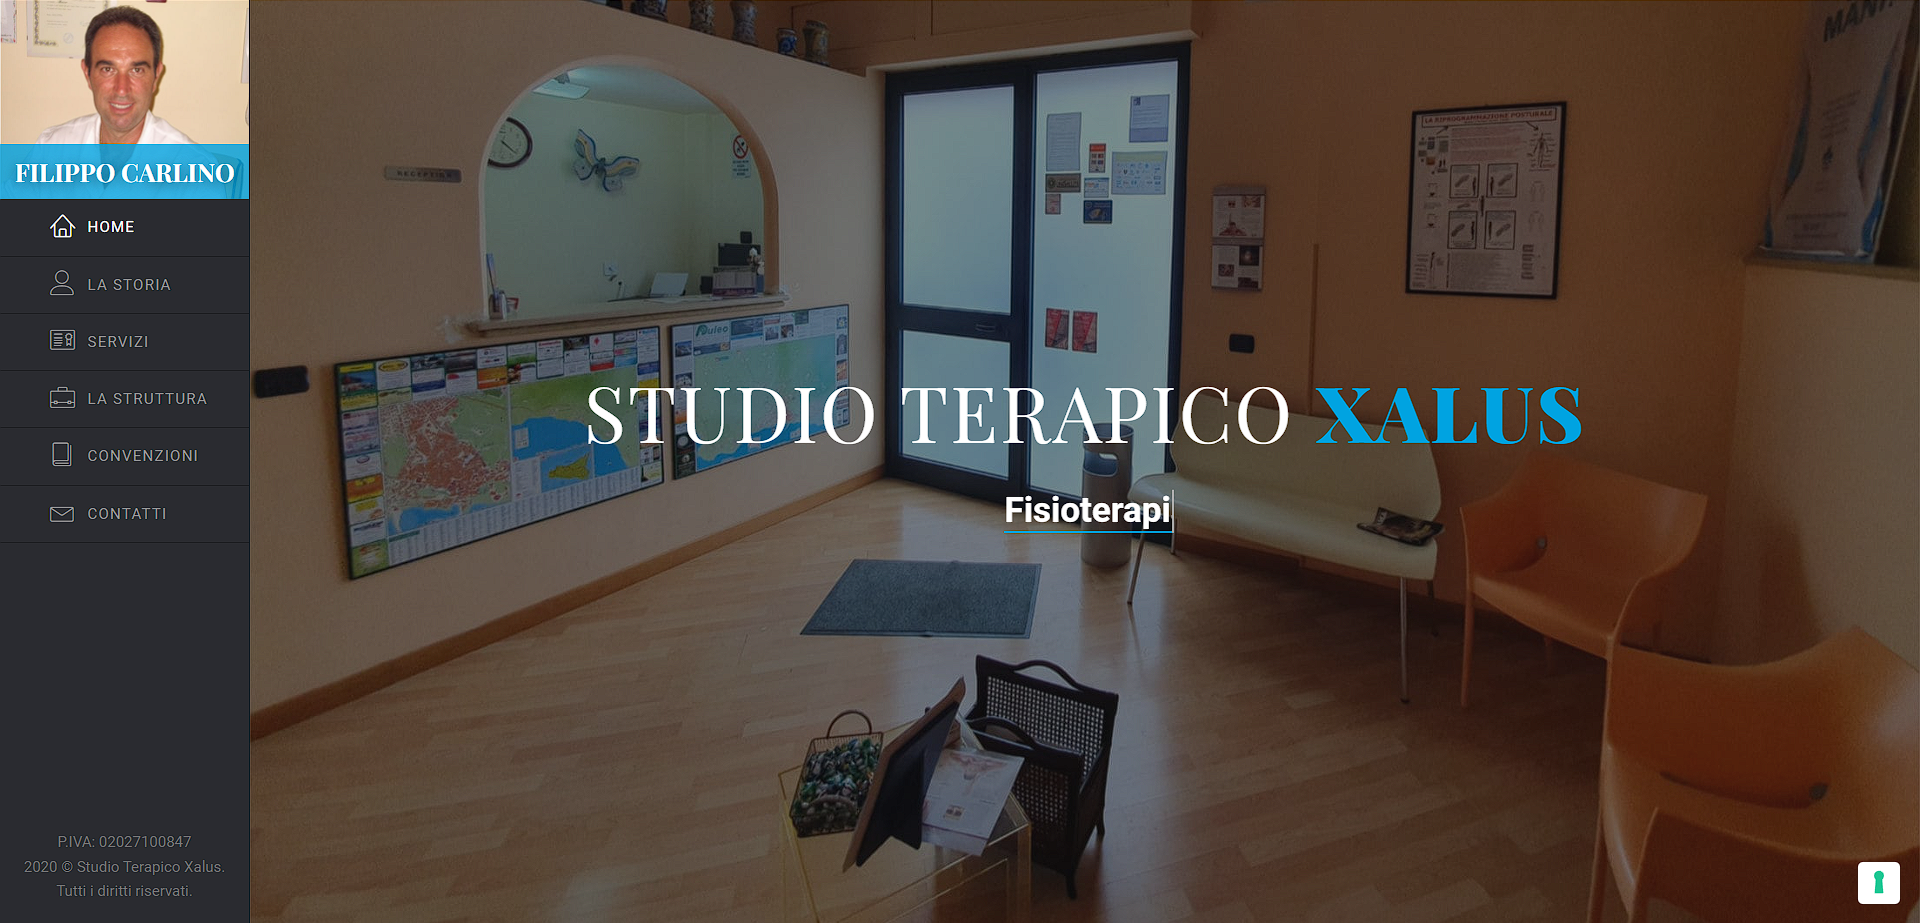 Studio Terapico Xalus